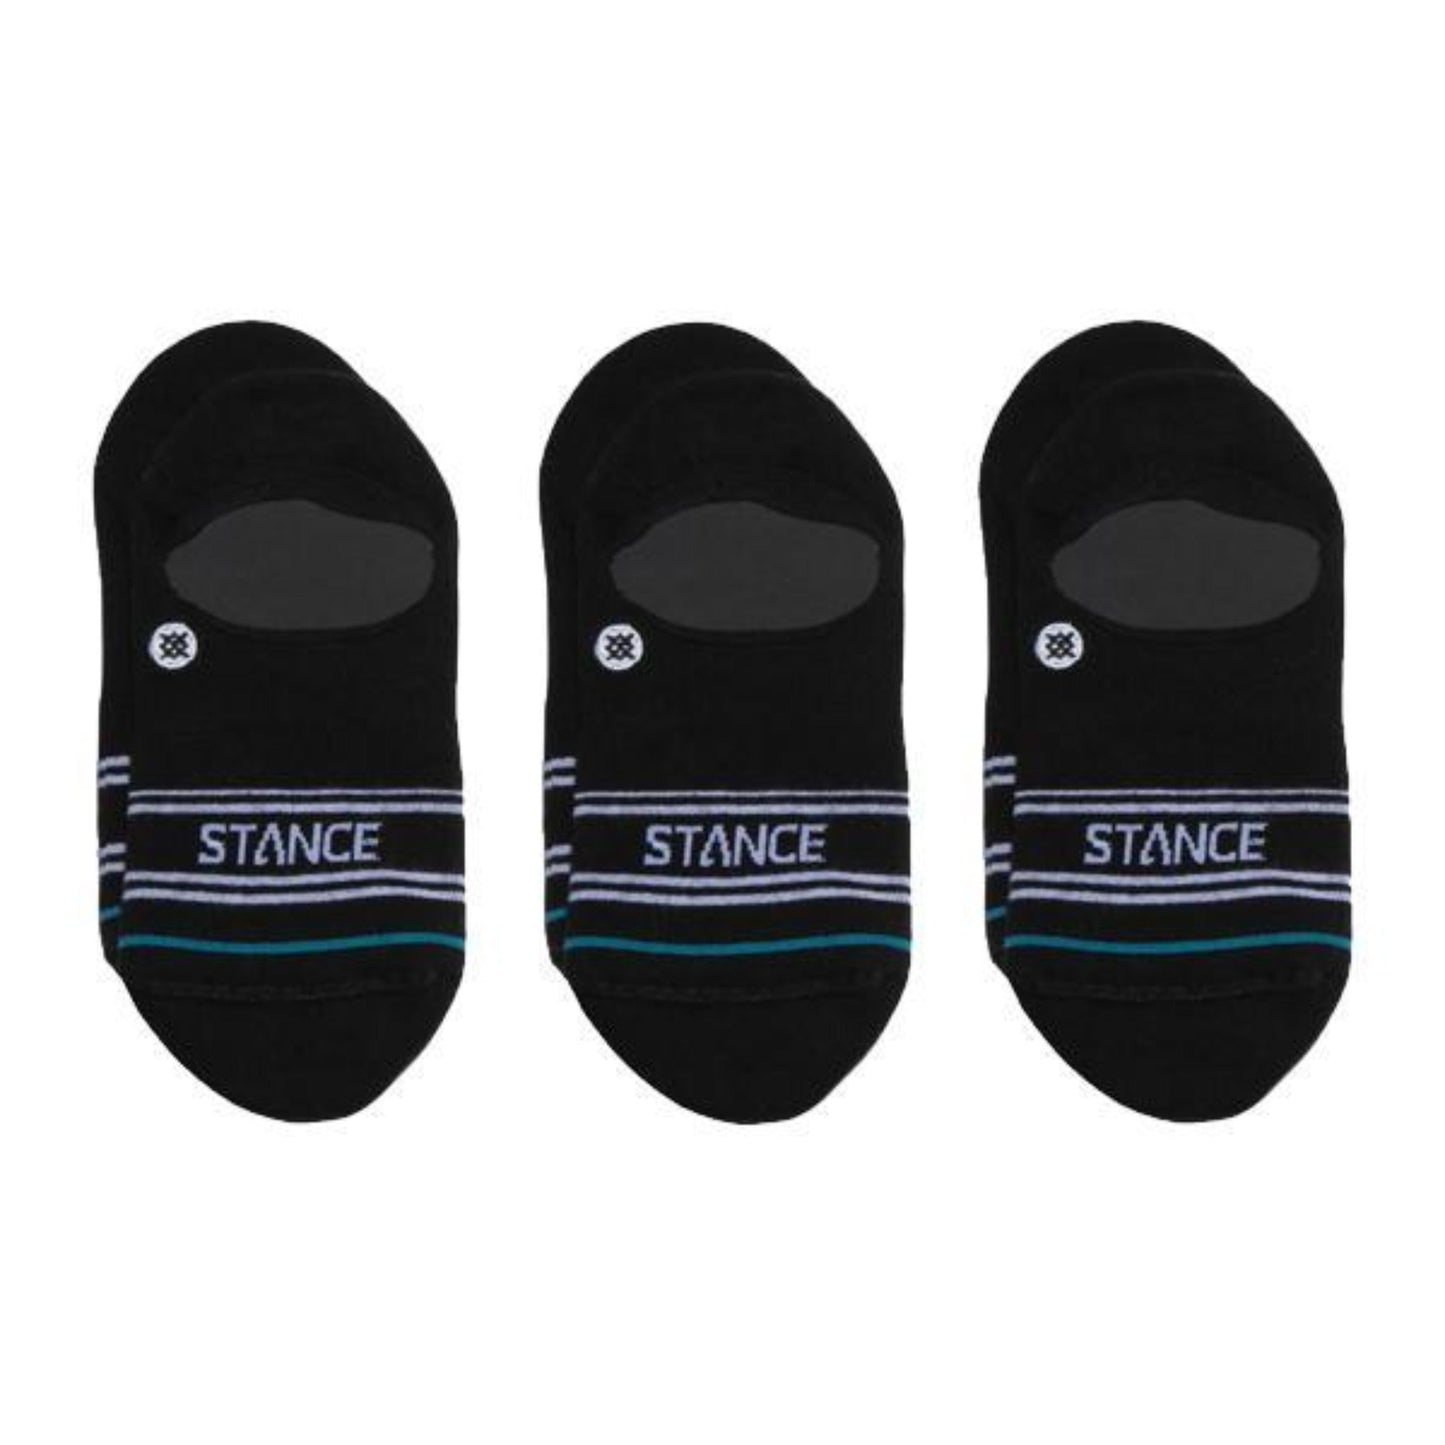 Stance - Basic No Show Socks 3 pack